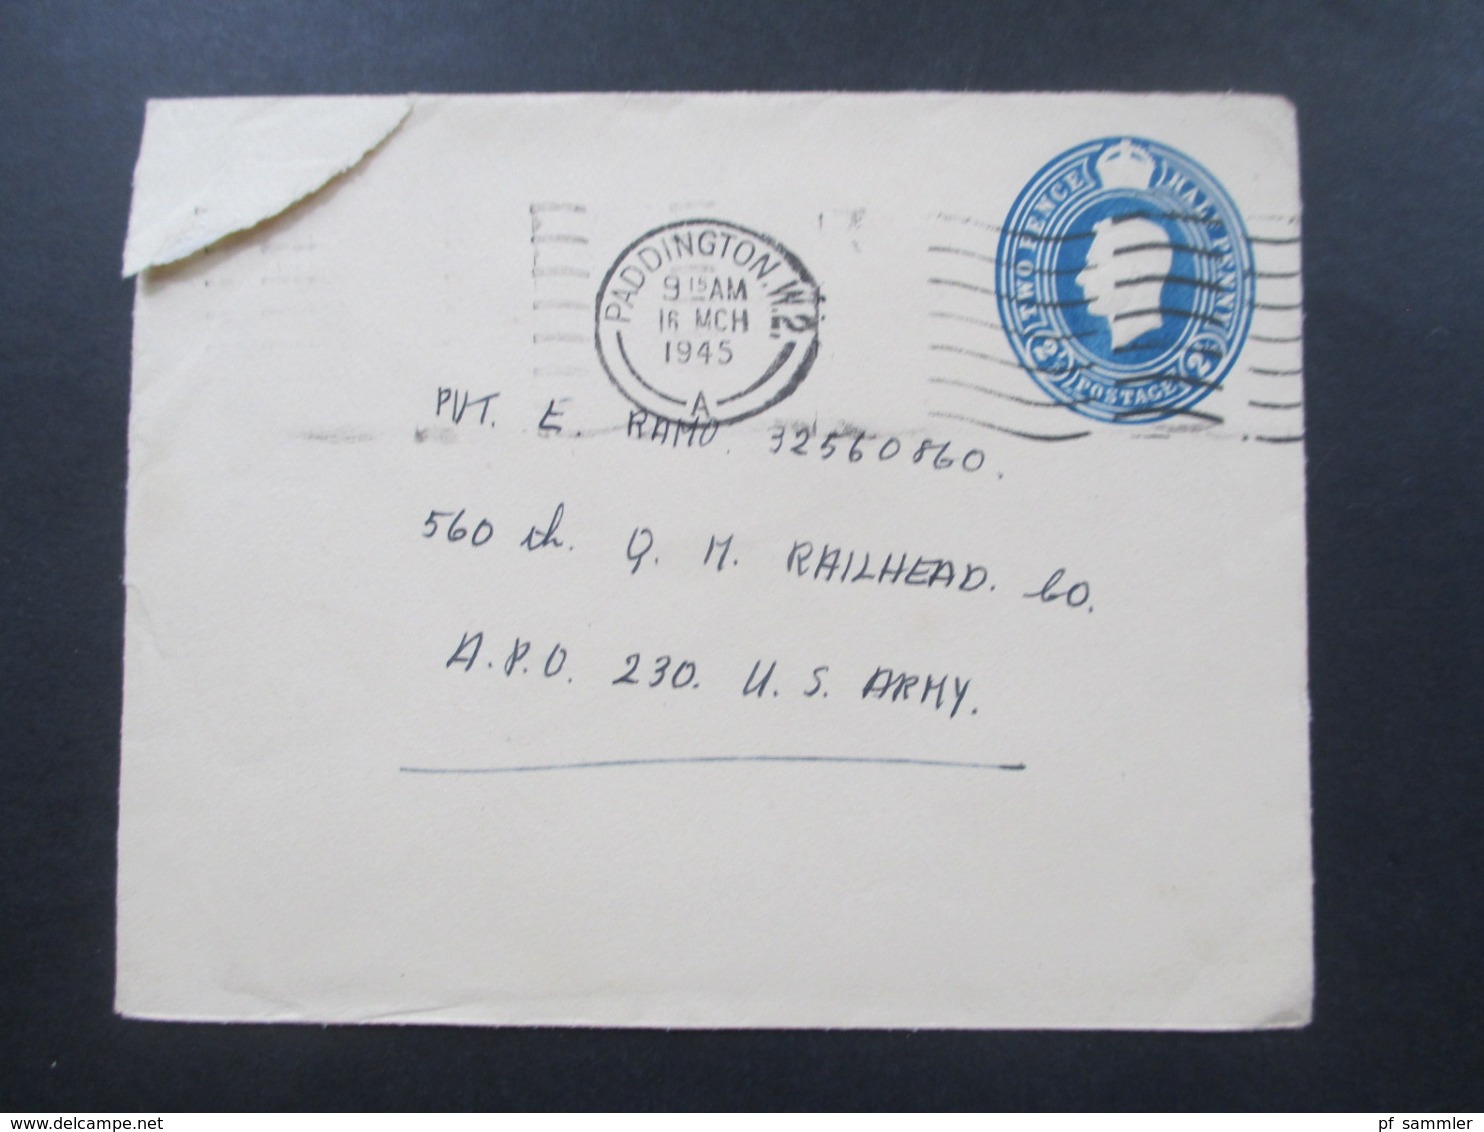 GB 16.3.1945 Die Letzten Kriegstage! GA Umschlag Paddington An Die US Army APO 230 Stempel US Army Postal Service - Storia Postale